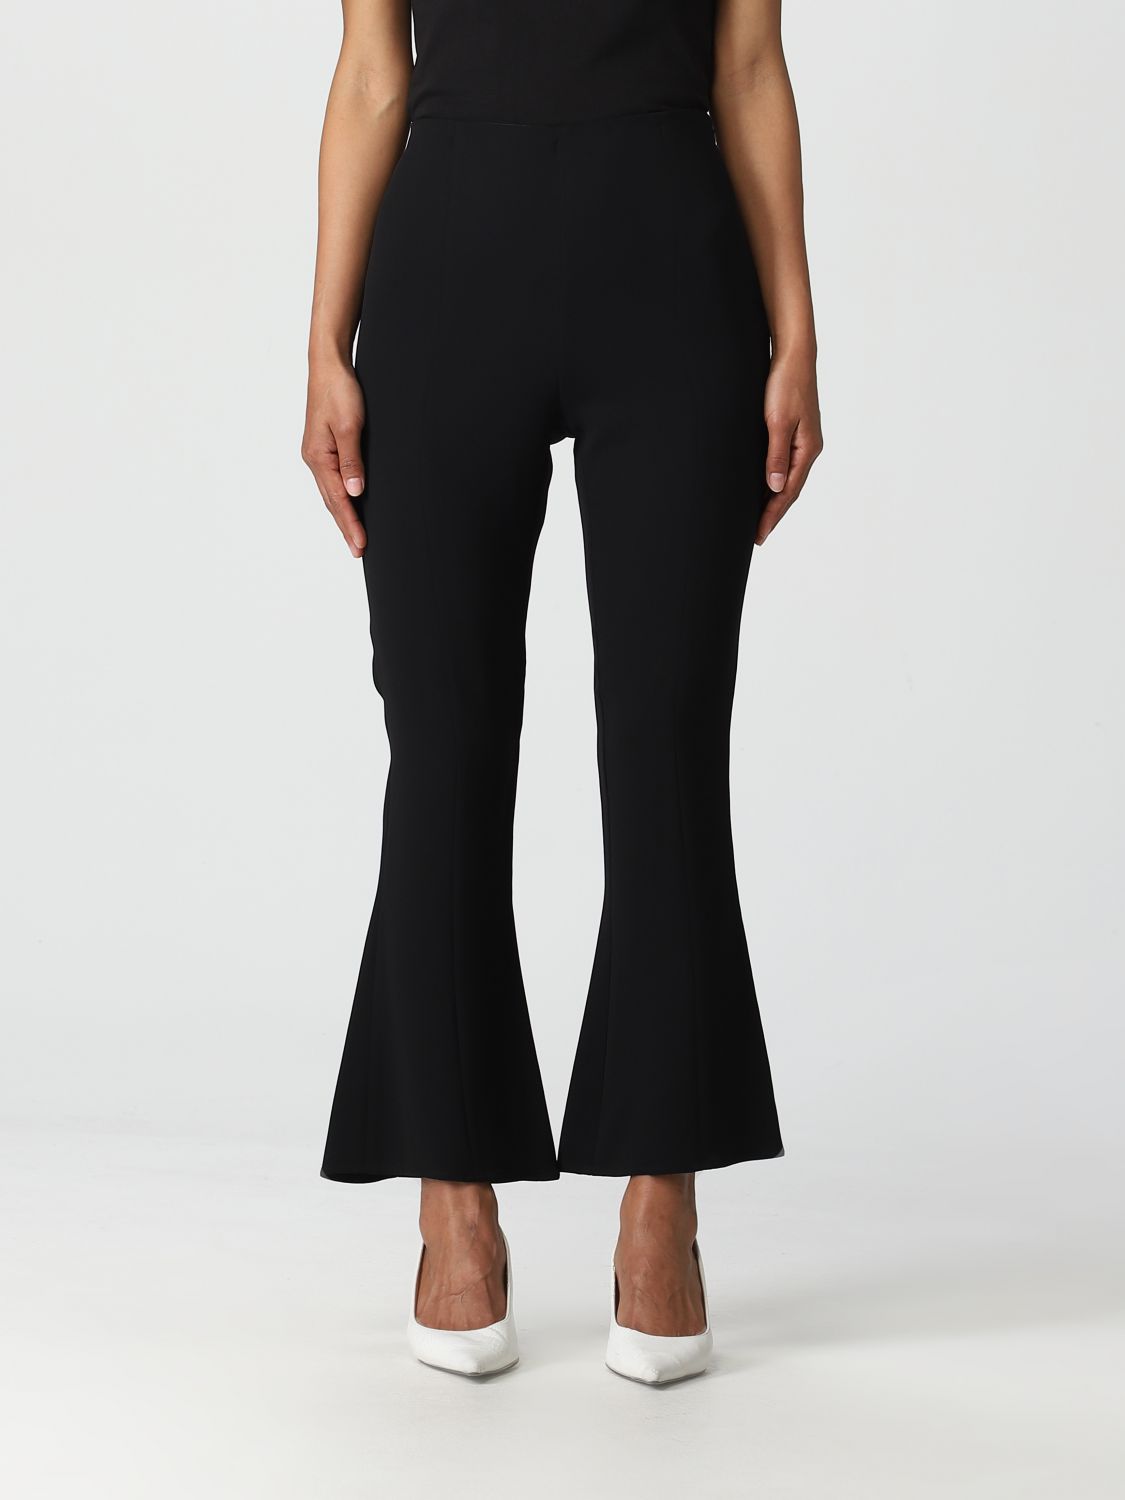 BLUMARINE: pants for woman - Black | Blumarine pants 4P006A online on ...